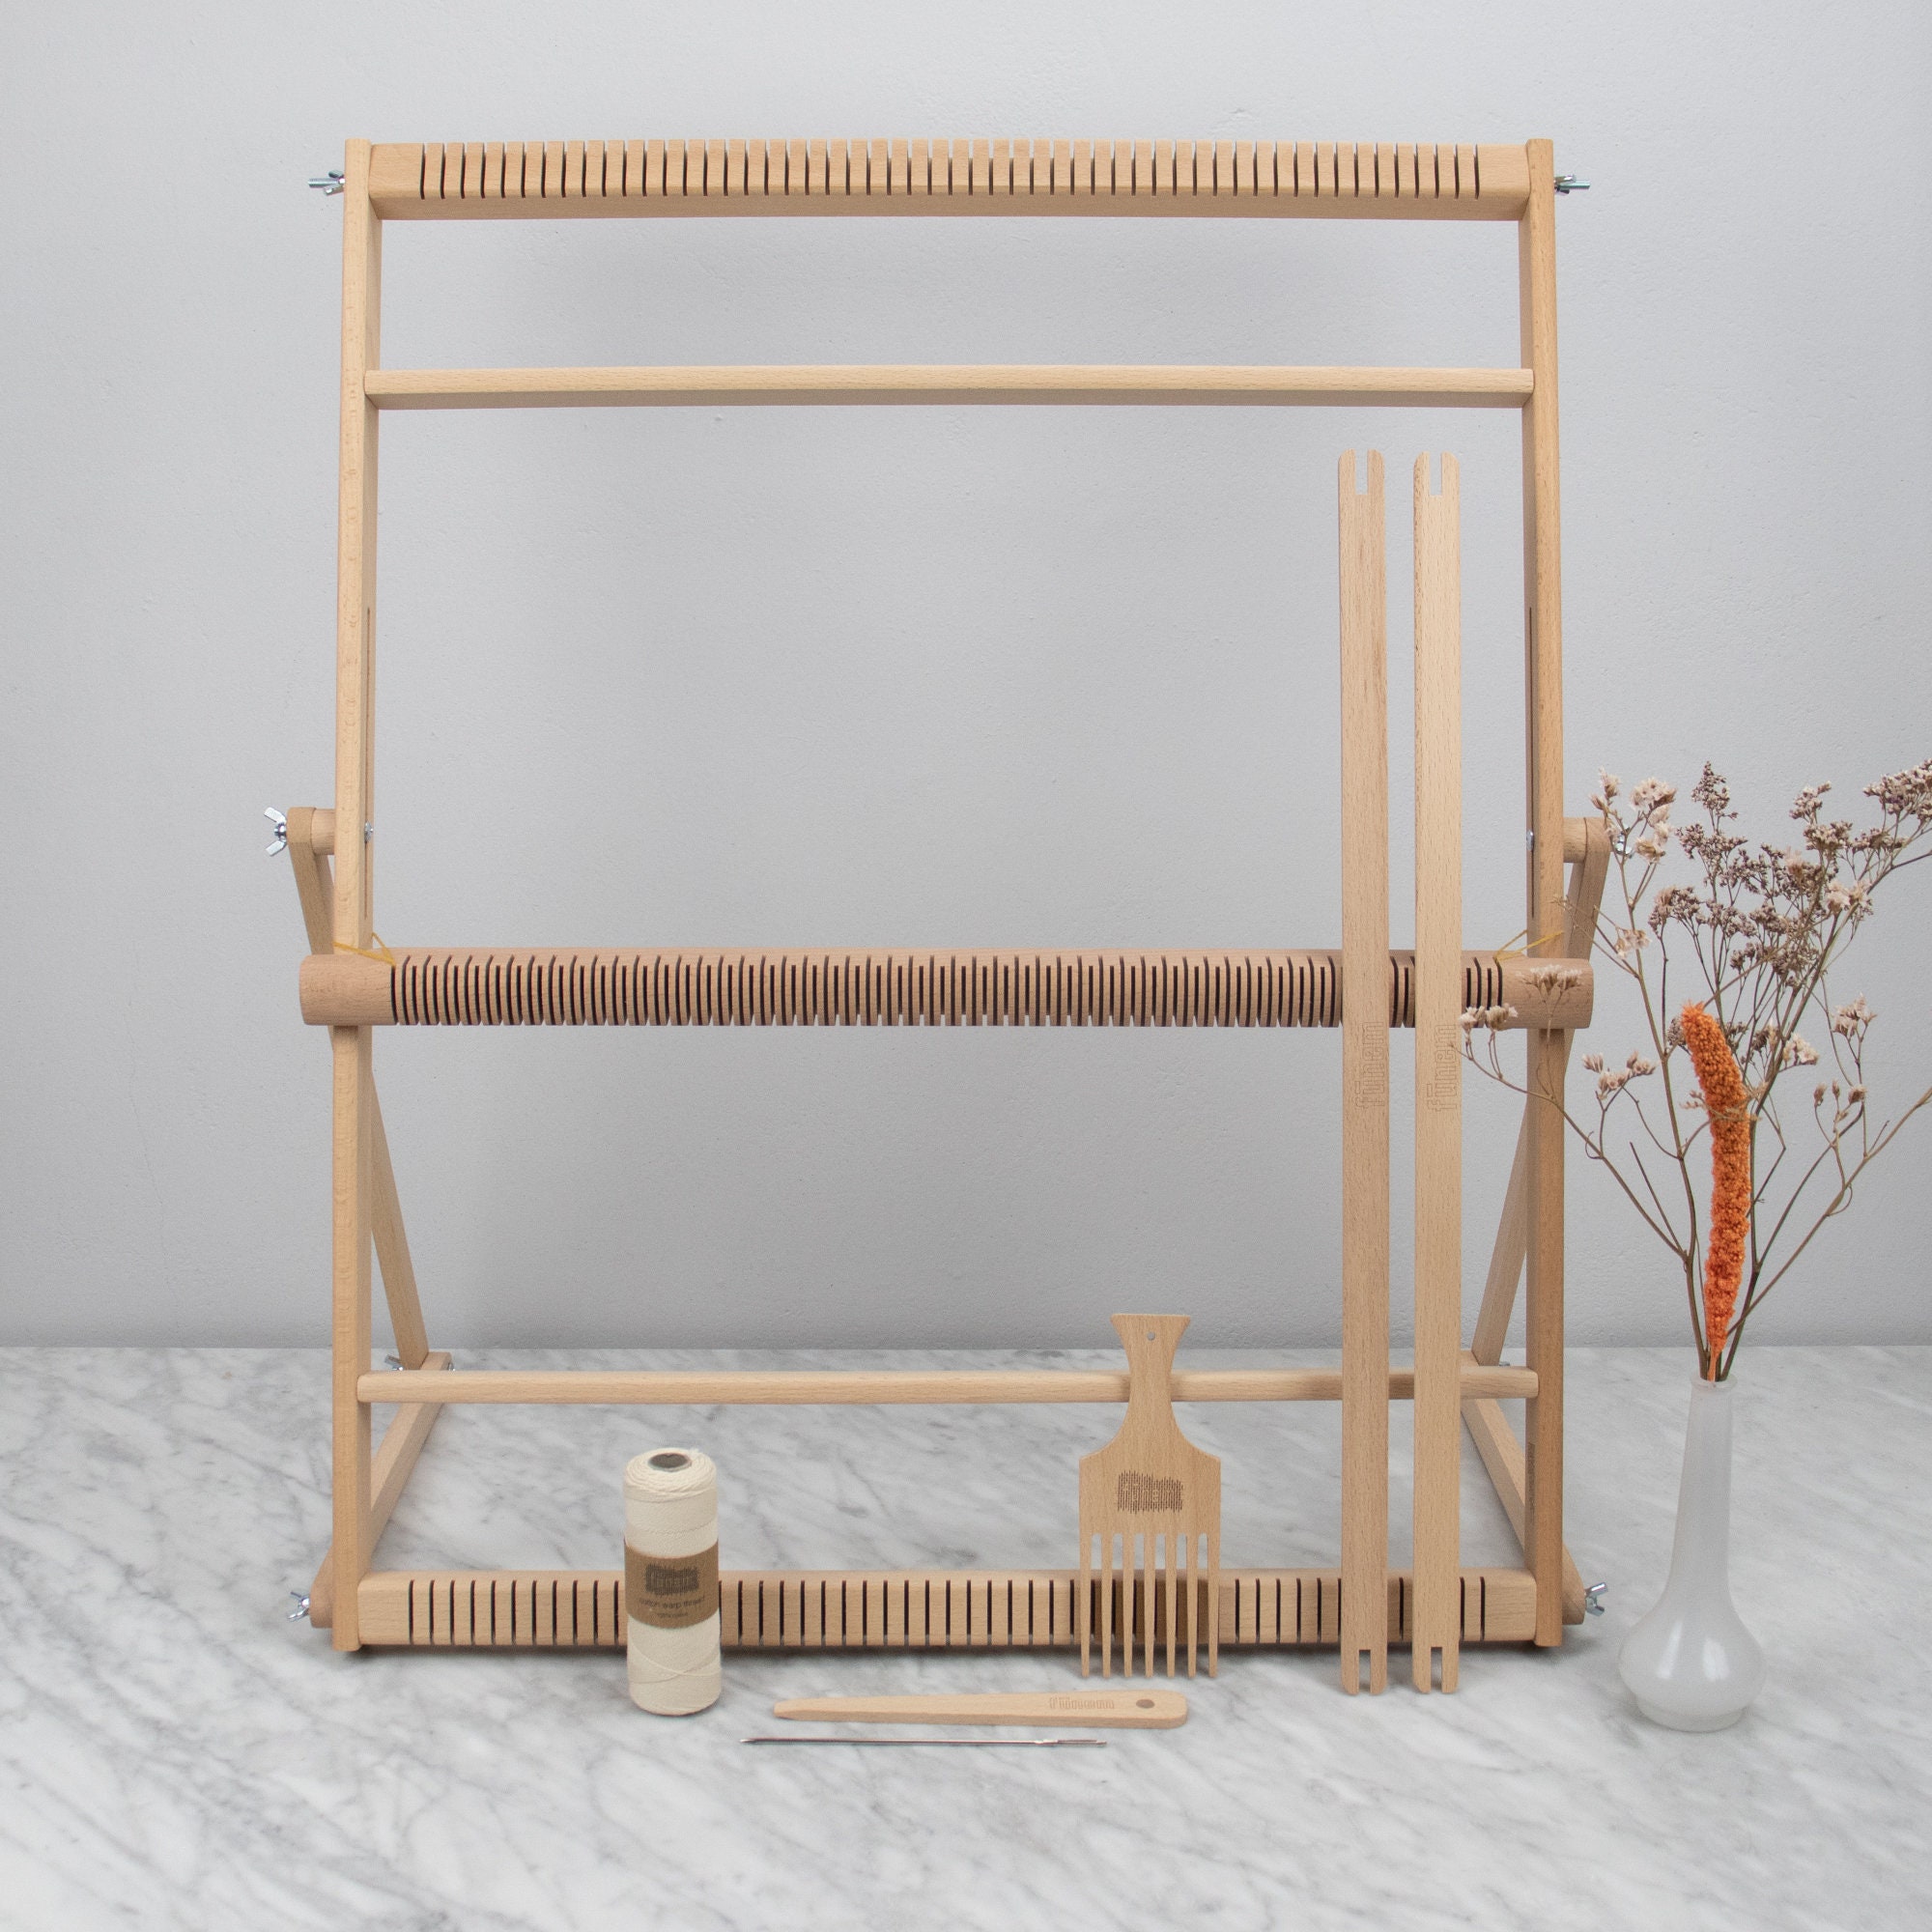 Weaving Loom, DIY Hand-Knitting Weaving Machine Creativity Weaving Frame  Loom, Multi-Craft Wooden Weaving Loom with Mixed Yarns, Adjusting Rod, Comb